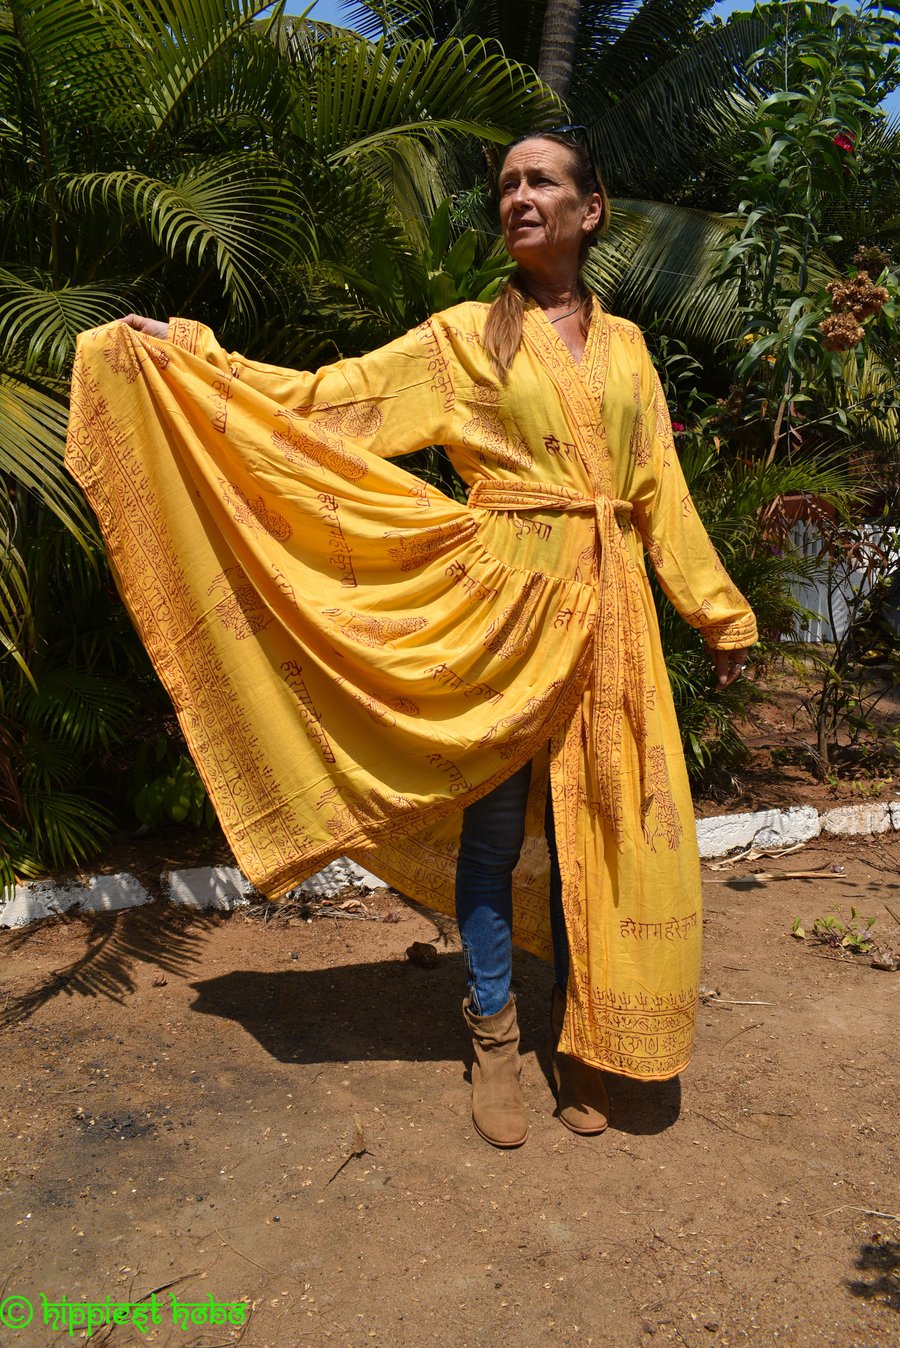 Beautiful Hindu Print Long Sleeve Kimono Dress Festival Clothing, Travel Dresses